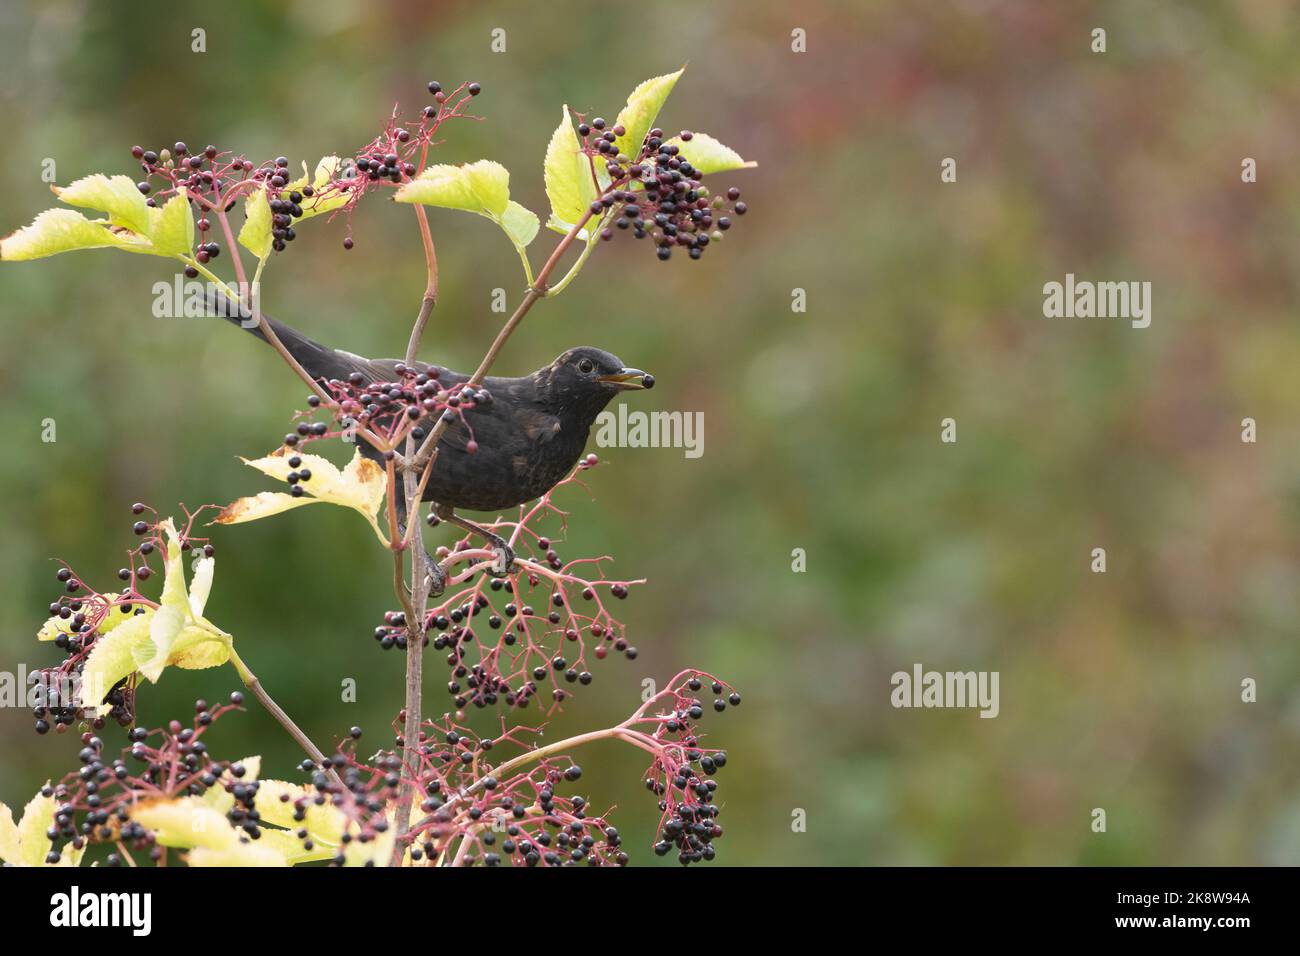 A Young Adult Male Blackbird (Turdus Merula) Feeding on Elder Berries (Sambucus Nigra) in Autumn Stock Photo